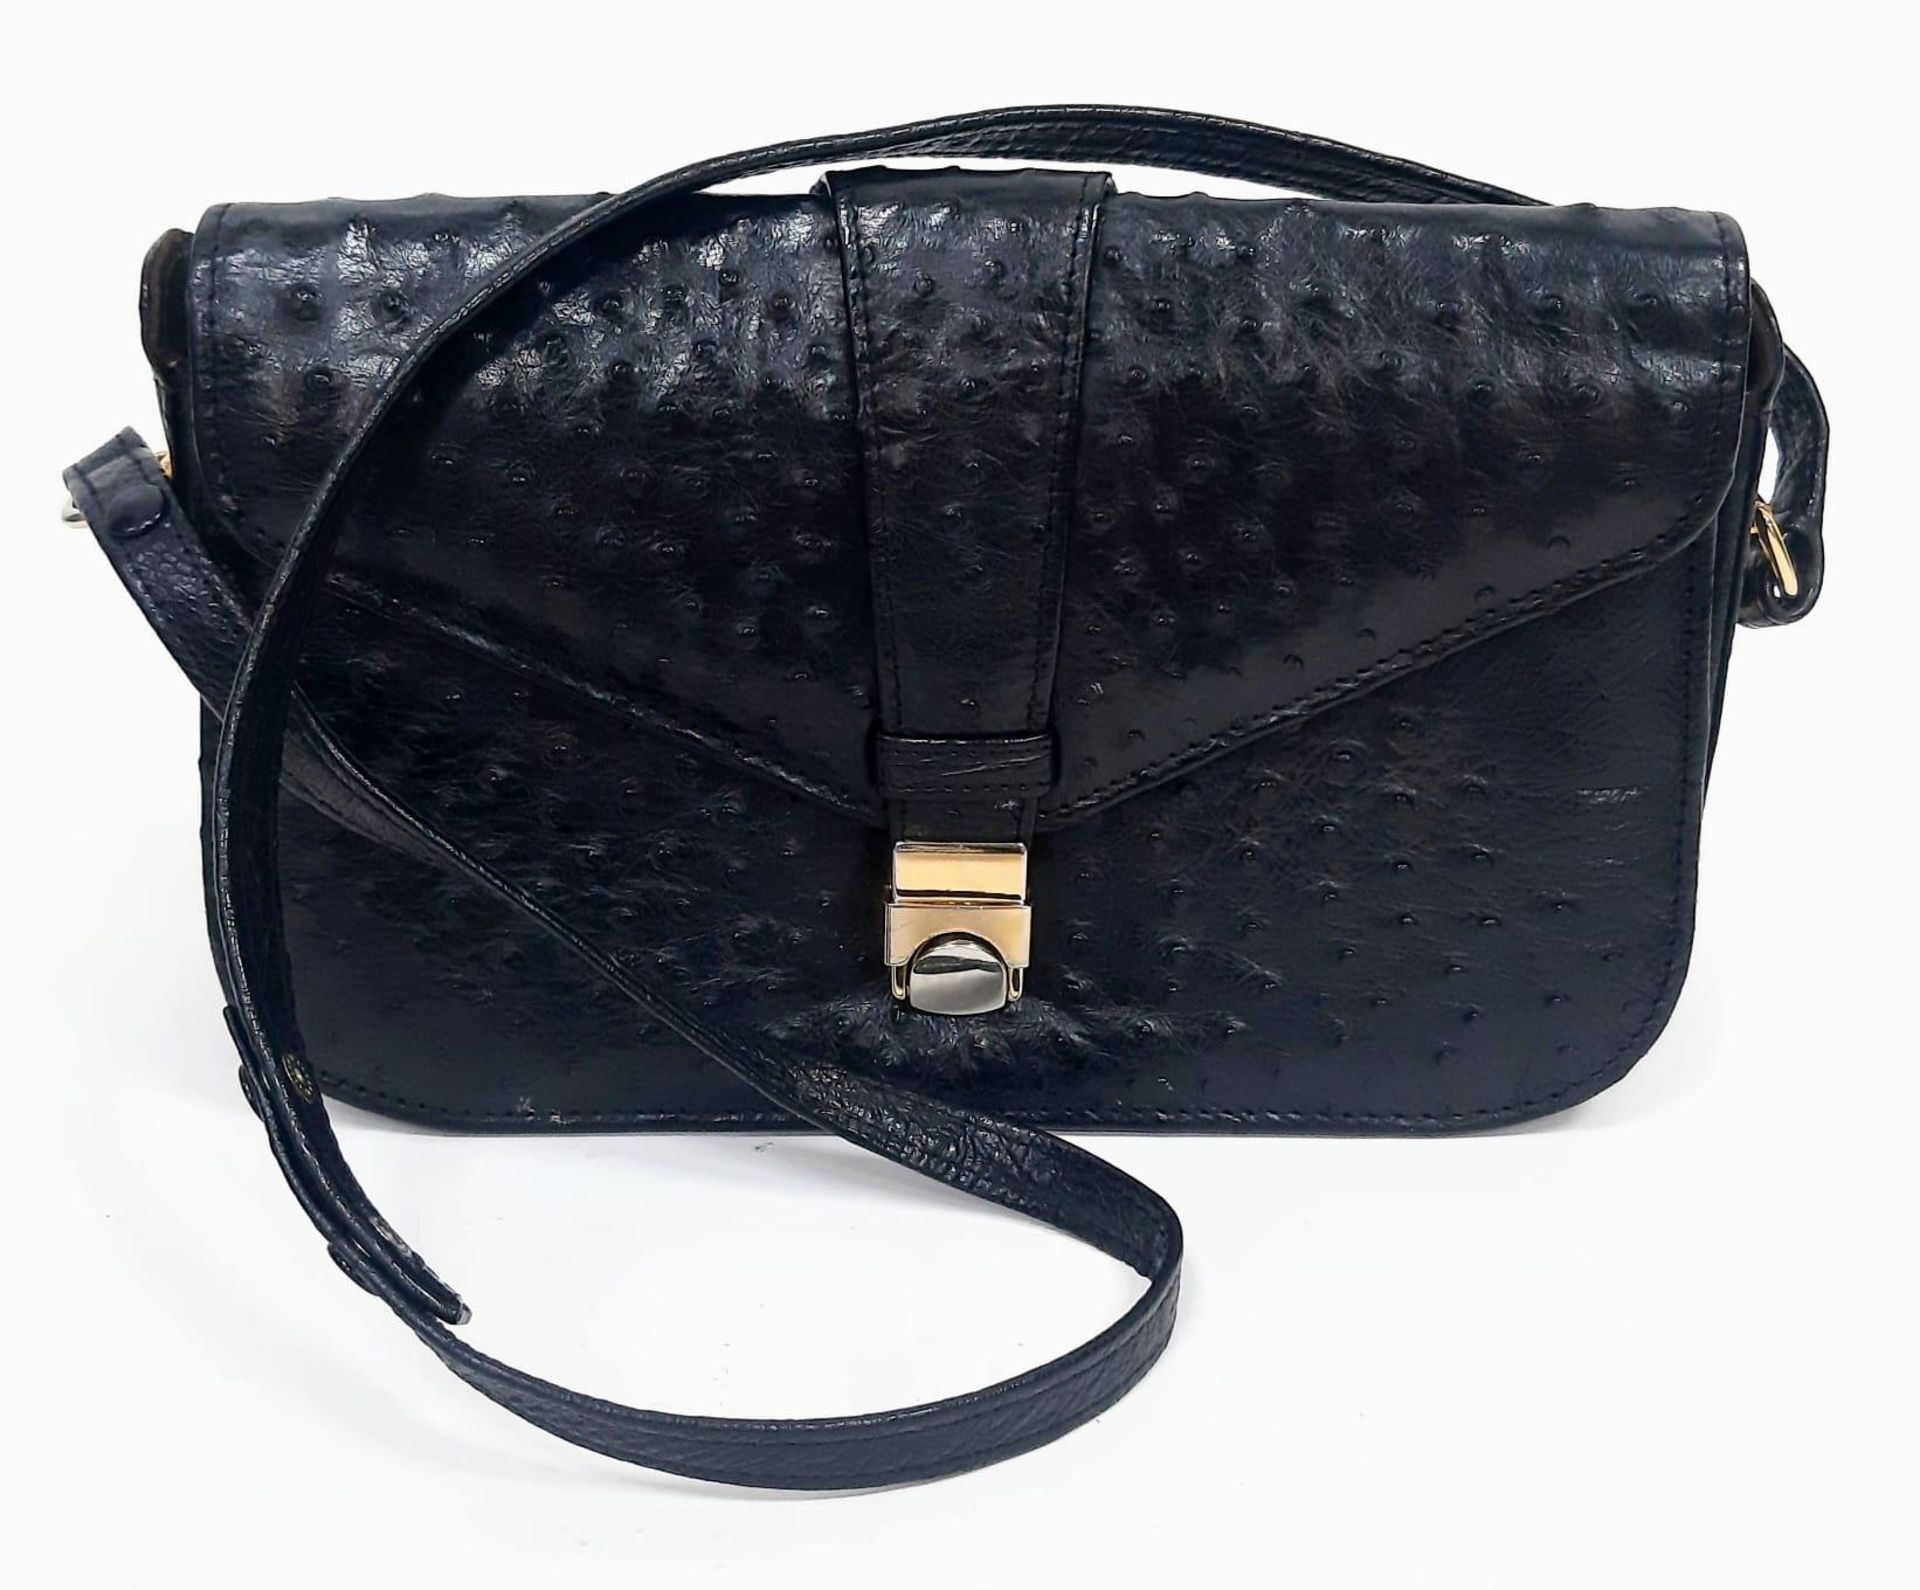 Vintage Corbeau Ostrich Leather Handbag. Circa 1970s, this wonderful handbag oozes elegance.